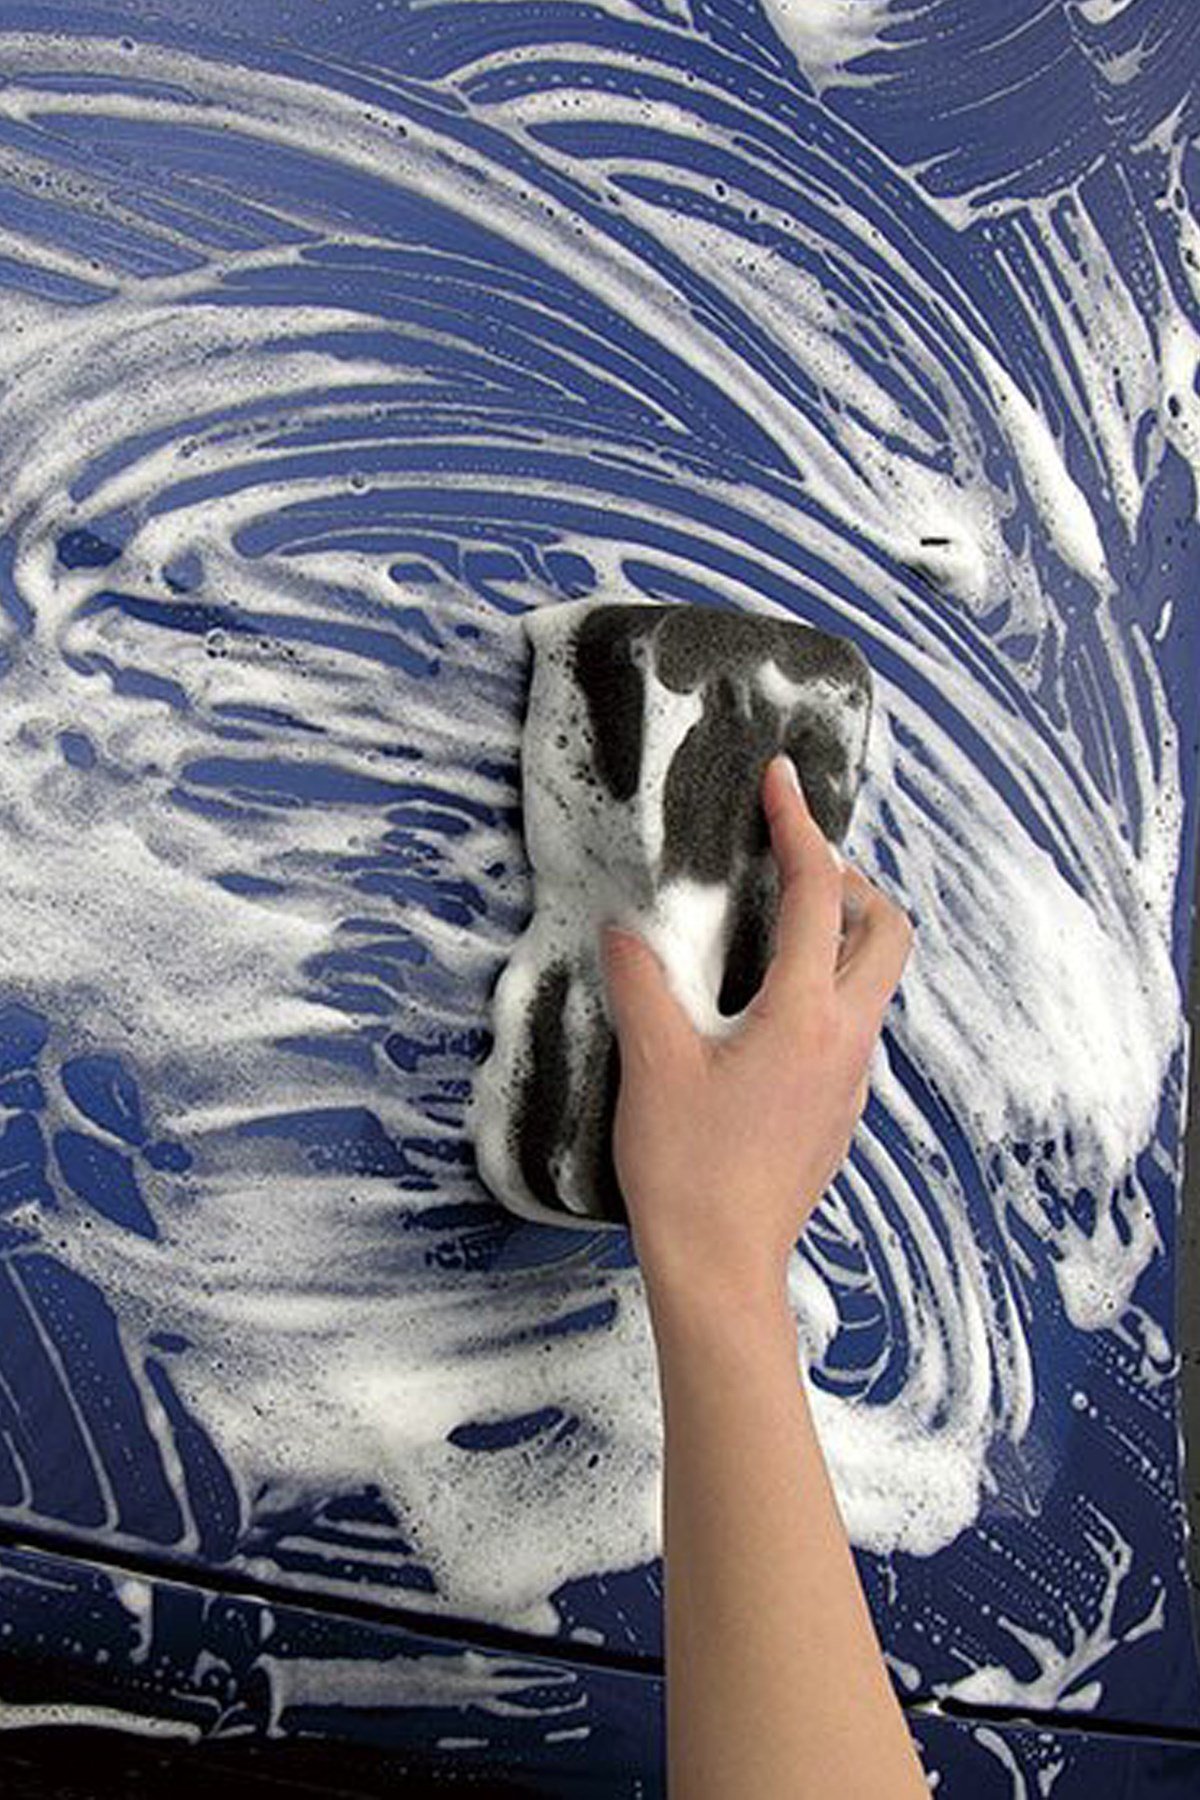 Soft99 Treatment Shampoo Seramik Kaplama İçin Şampuan 750ml.